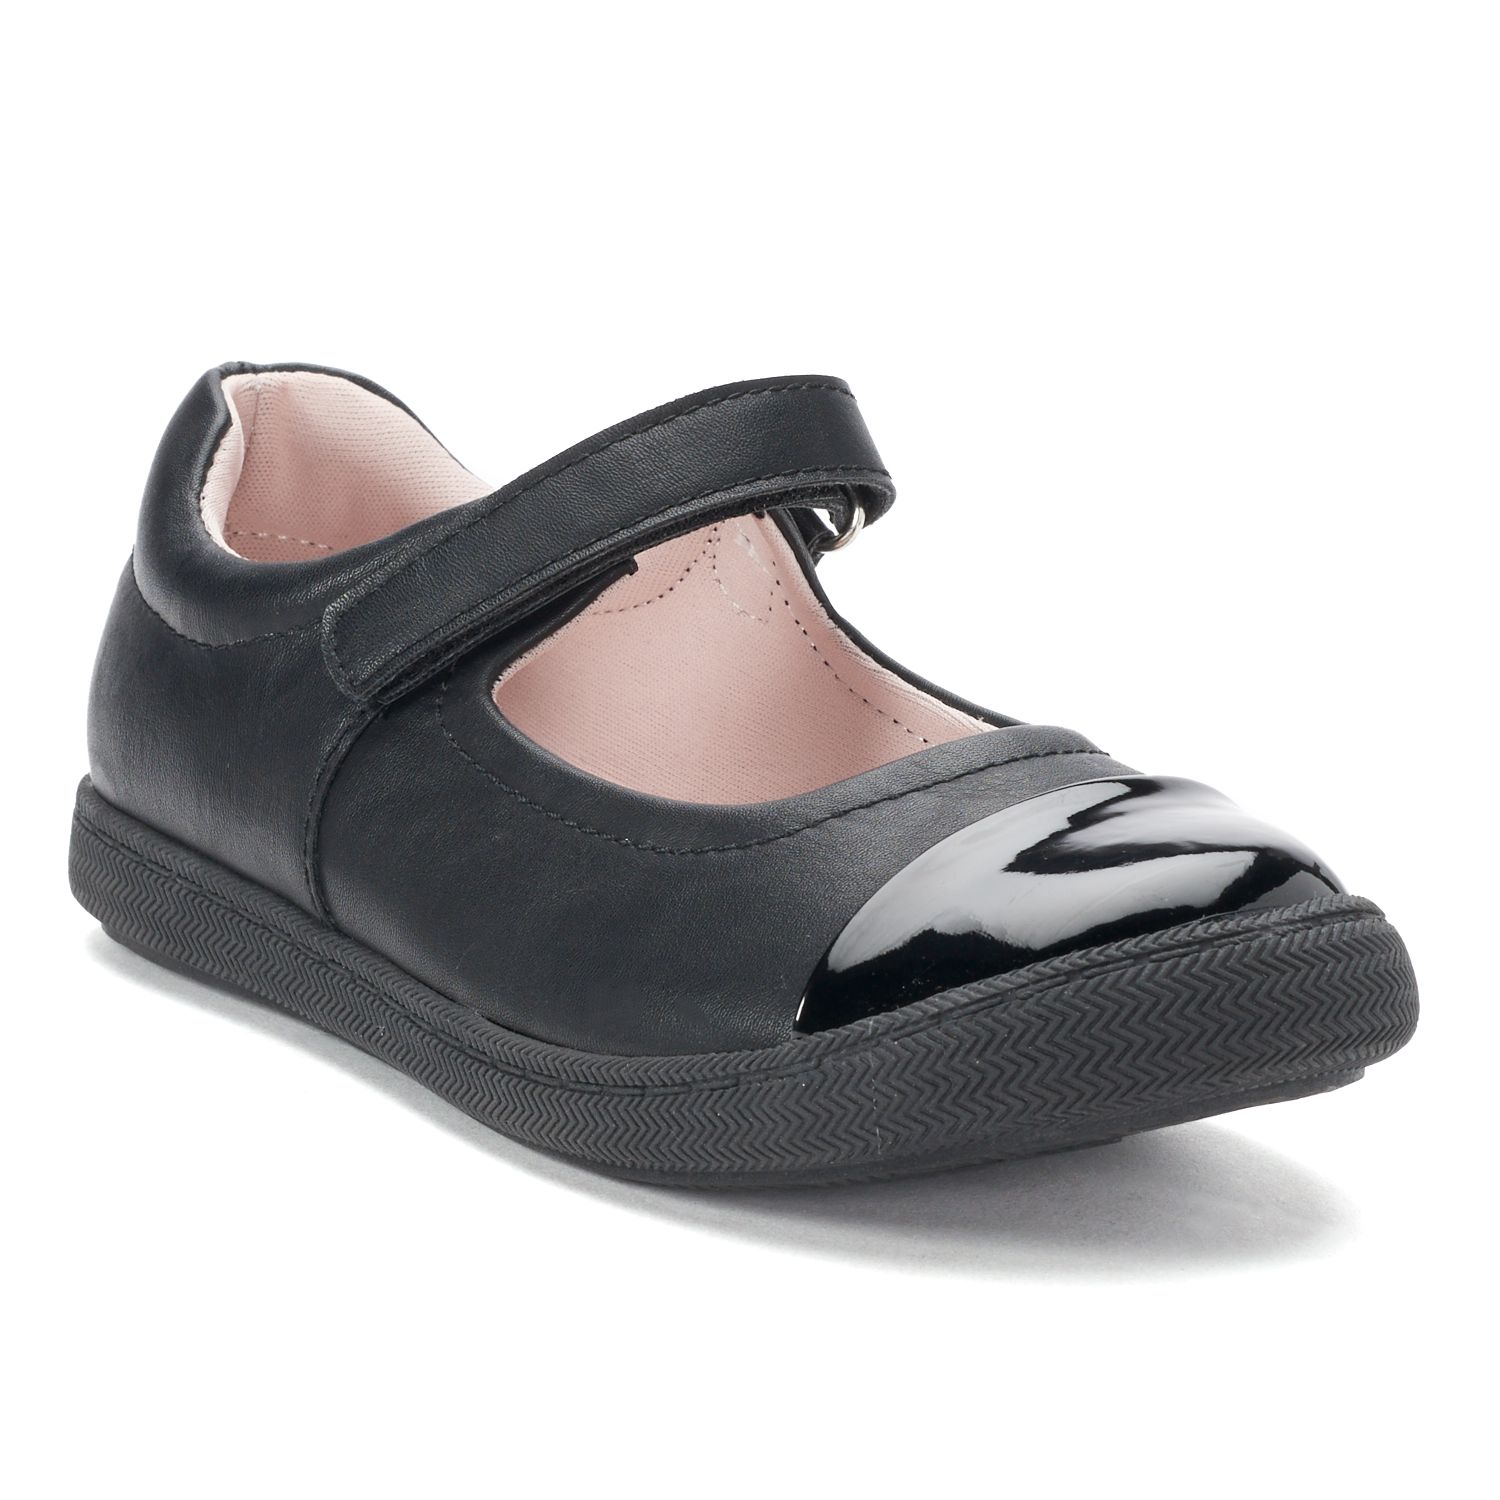 size 4 mary jane shoes